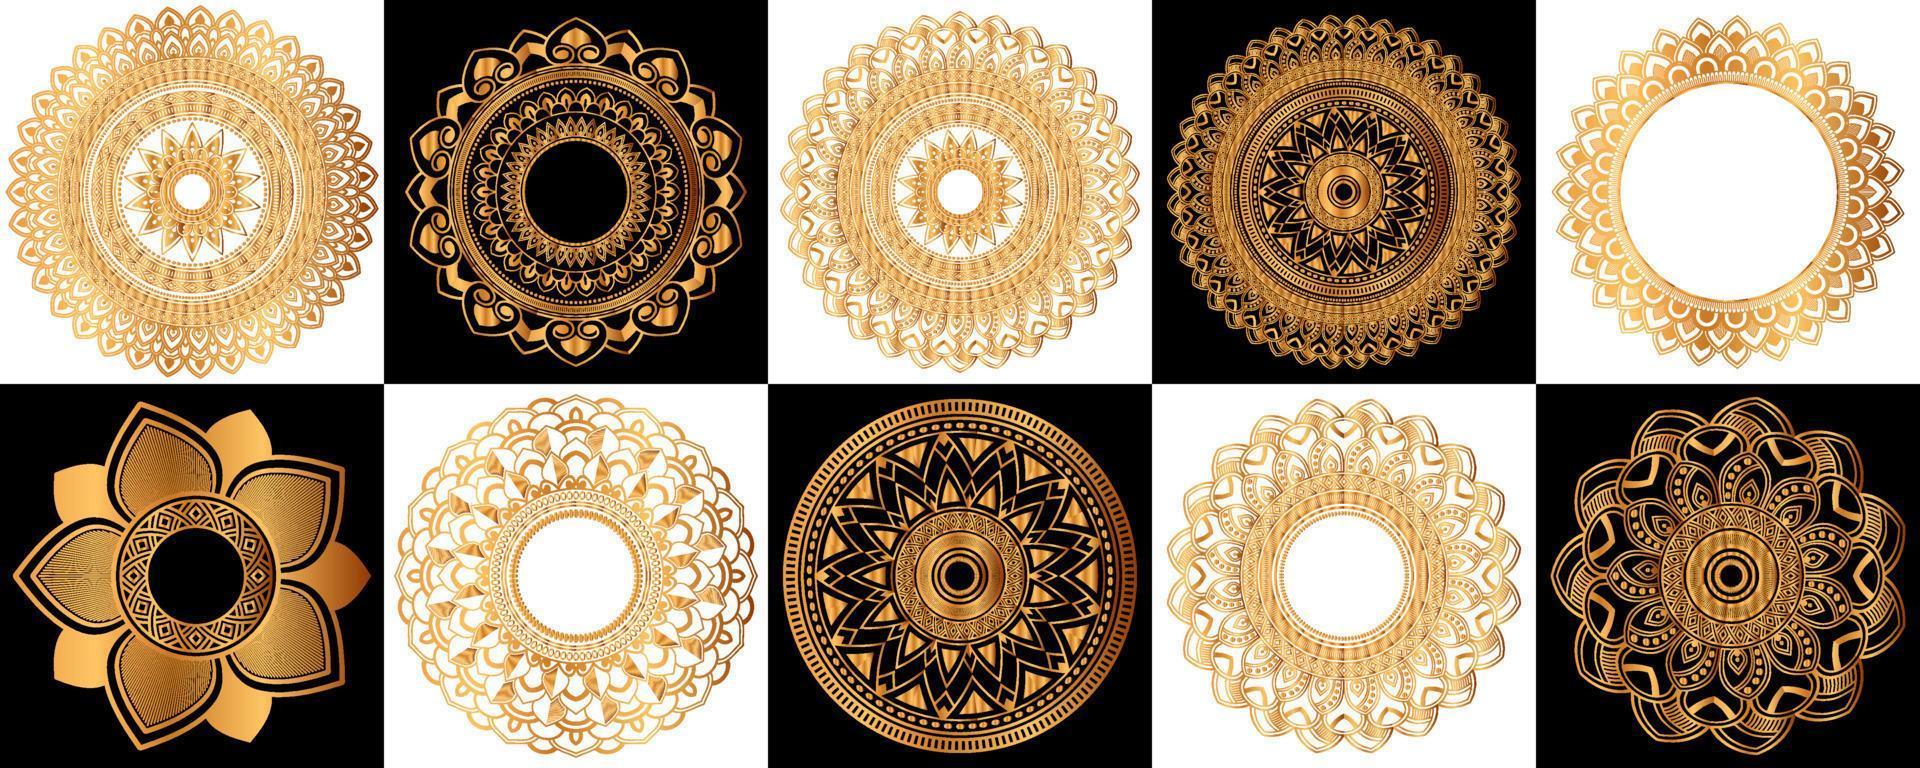 conjunto de mandalas zentangle dorados, mandala para henna, mehendi, tatuaje, elementos ornamentales étnicos decorativos, motivos orientales vector